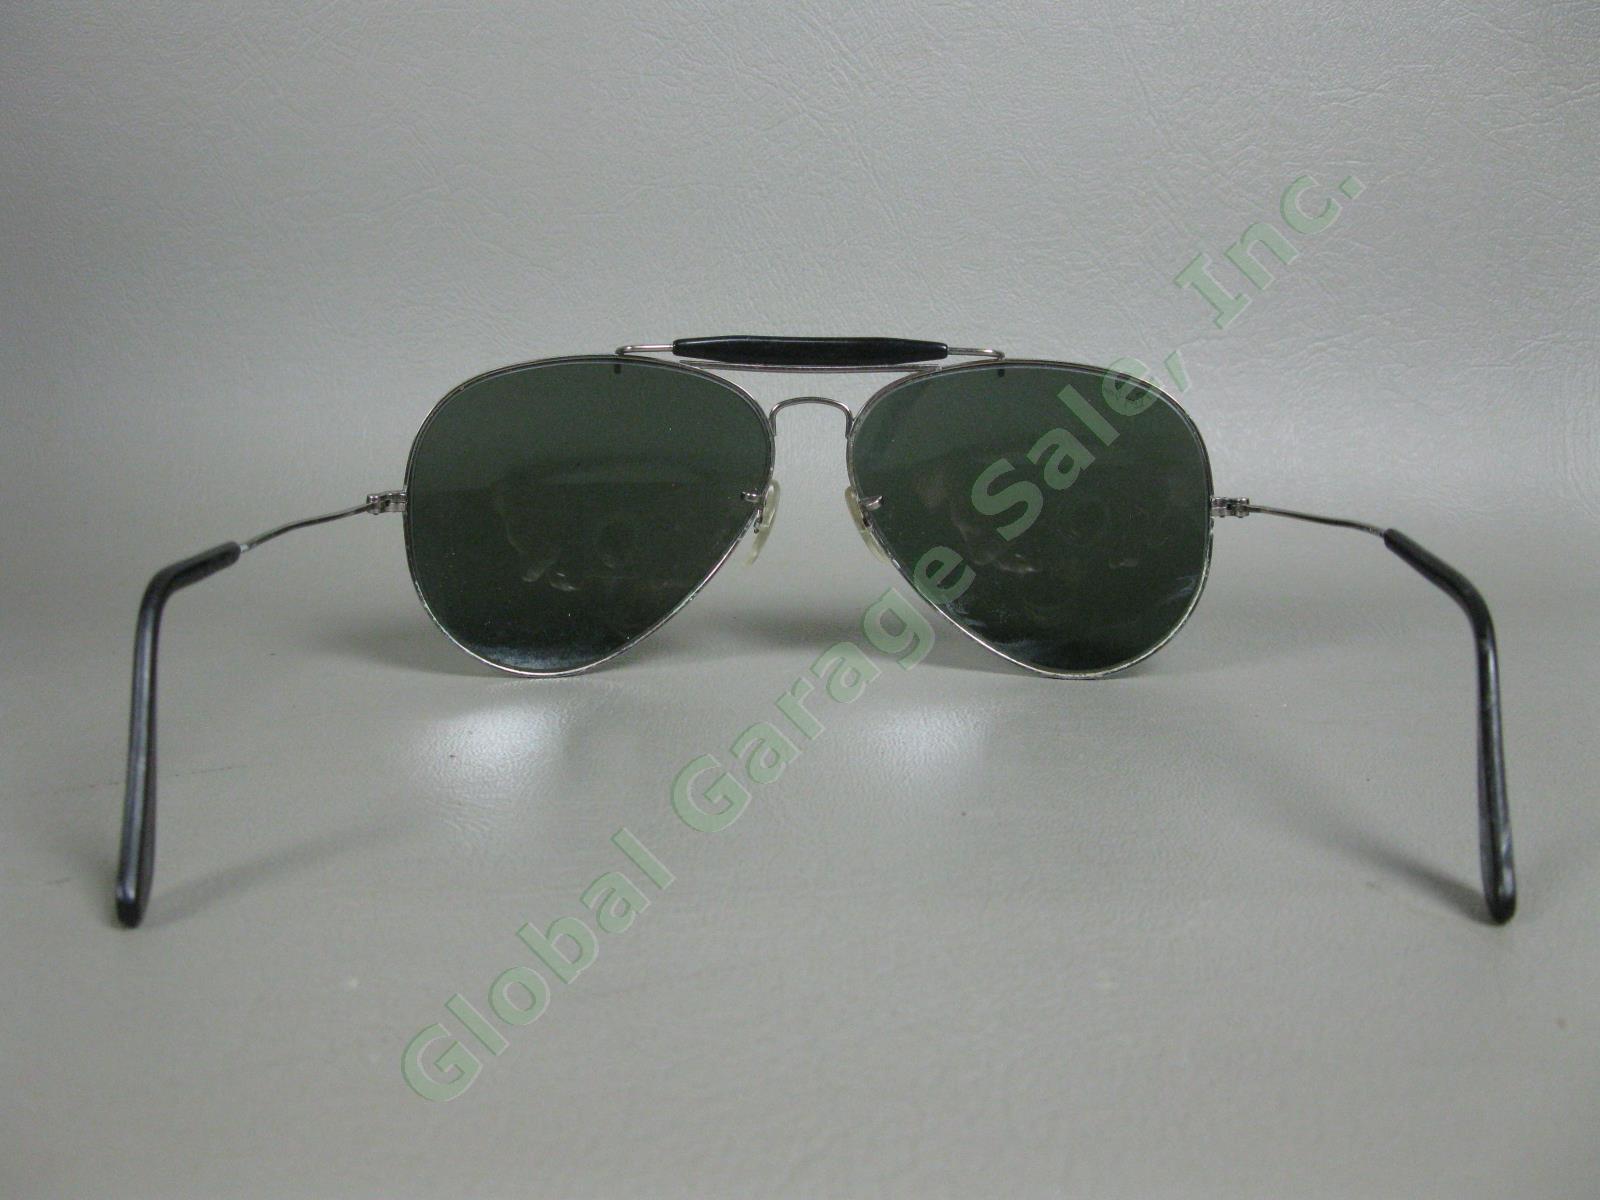 Vtg Bausch + Lomb Ray-Ban Large Aviator Sunglasses 62-14 Green Lenses w/ Case 3